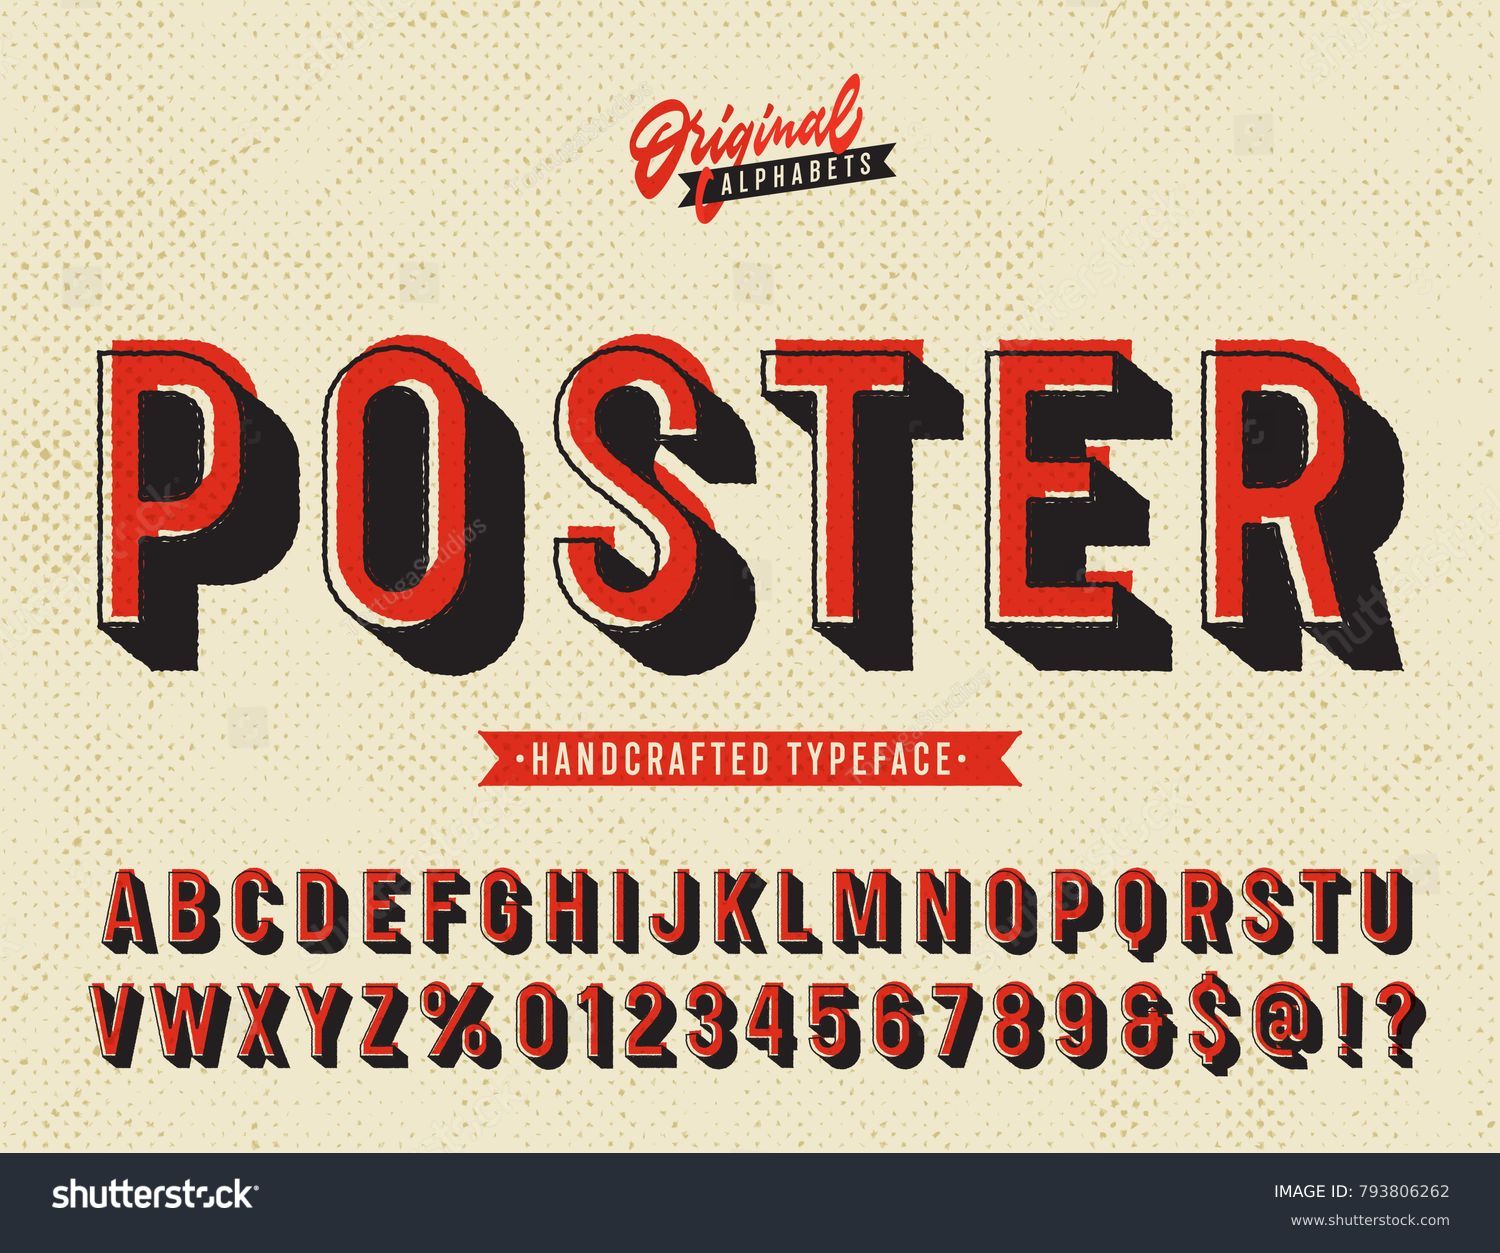 SVG of 'Poster' Vintage Sans Serif Alphabet with Offset Printing Effect. Retro Textured Typeface. Vector Illustration. svg